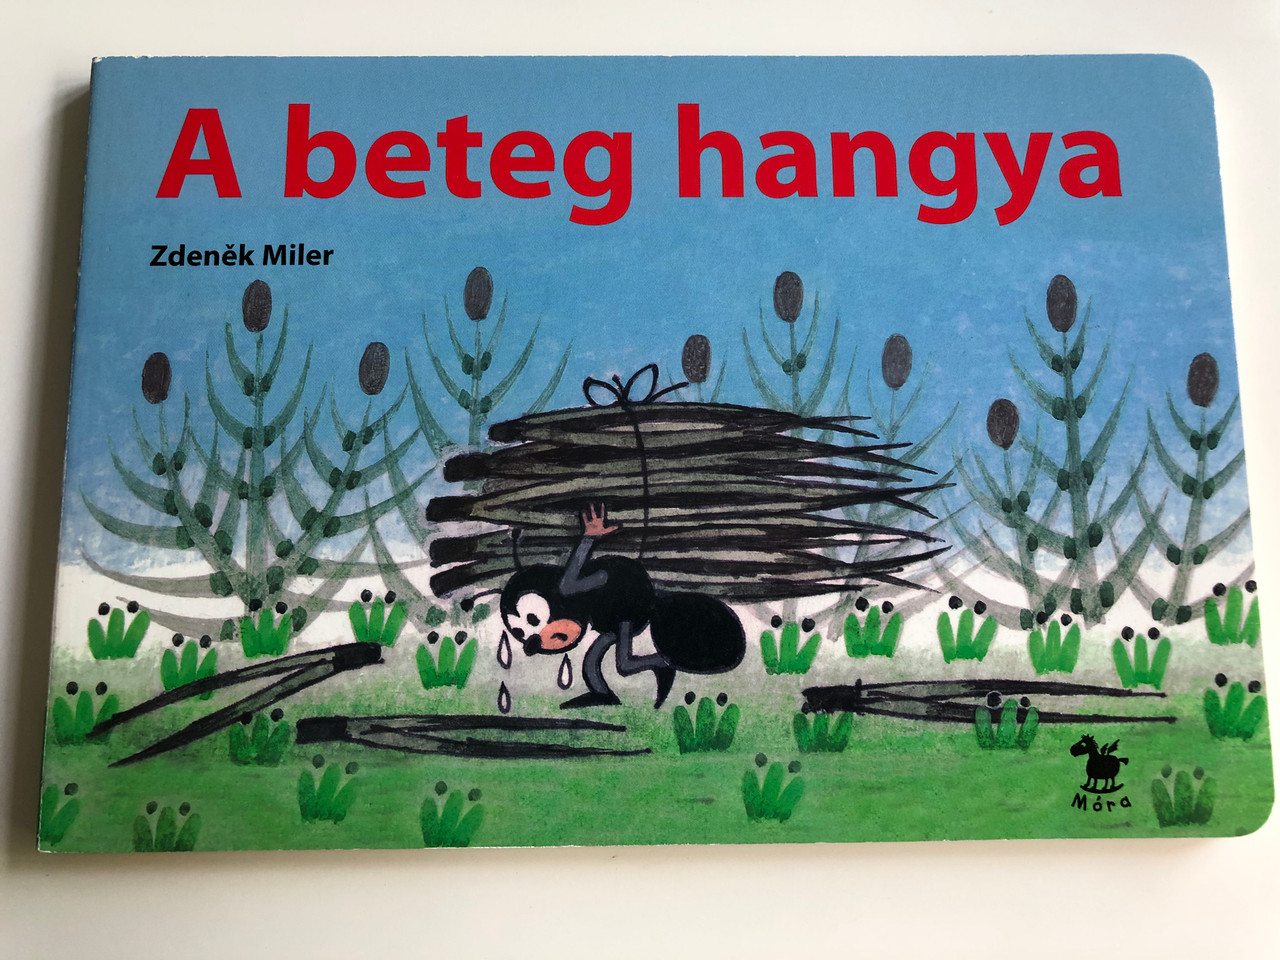 A beteg hangya by Zdenek Miler / Hungarian translation of Polámal se  mraveneček / Hungarian Board book for children / Móra 2006 -  bibleinmylanguage